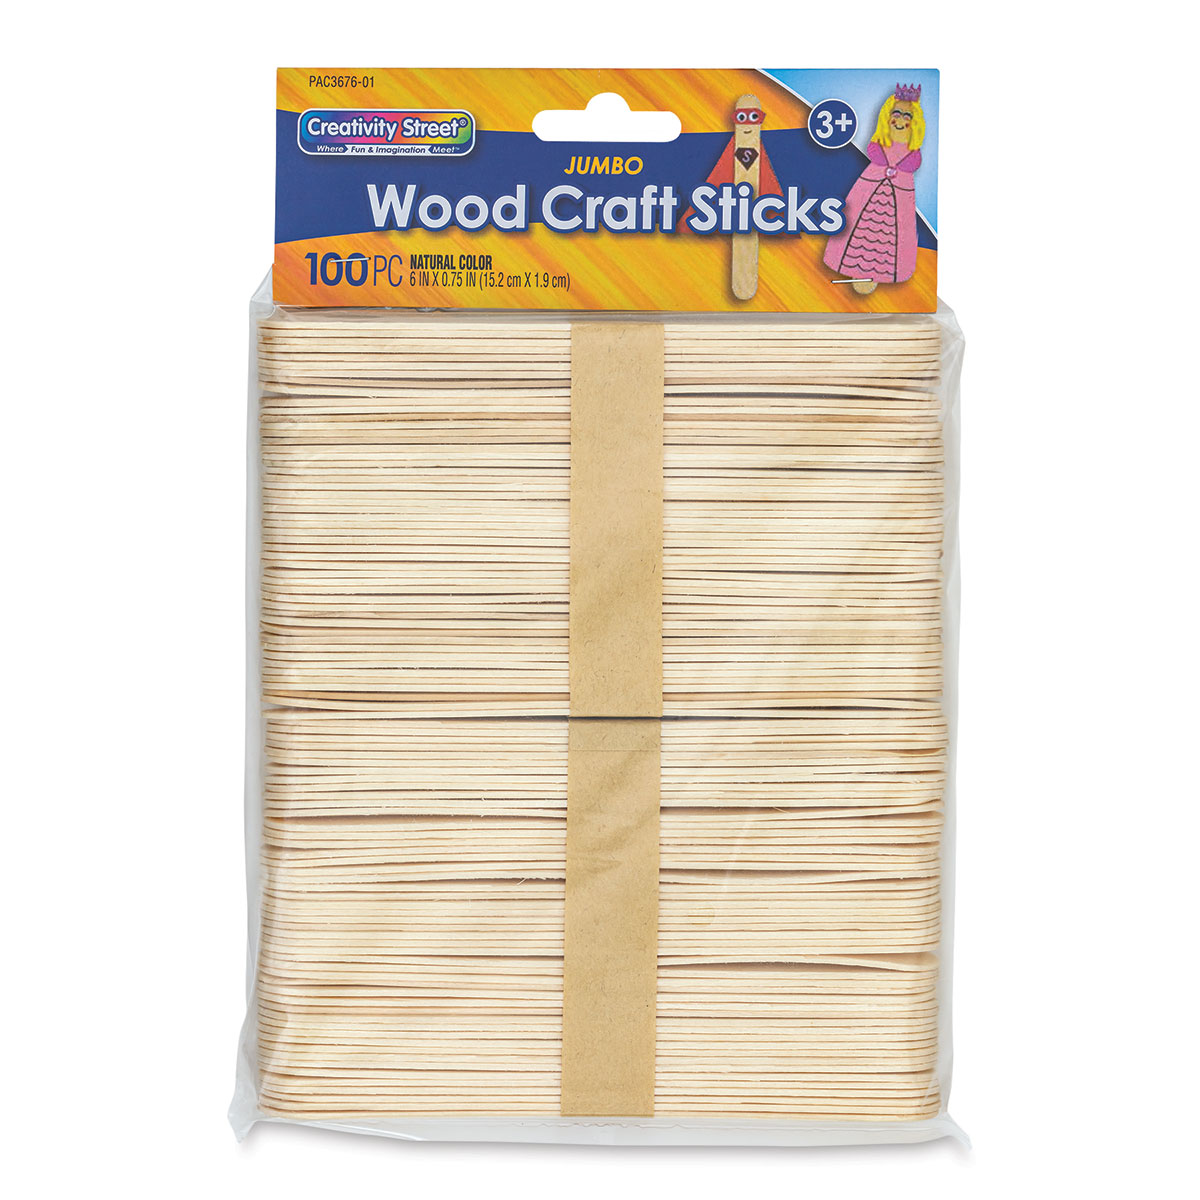 Creativity Street Regular Size Wood Craft Sticks - Shop Craft